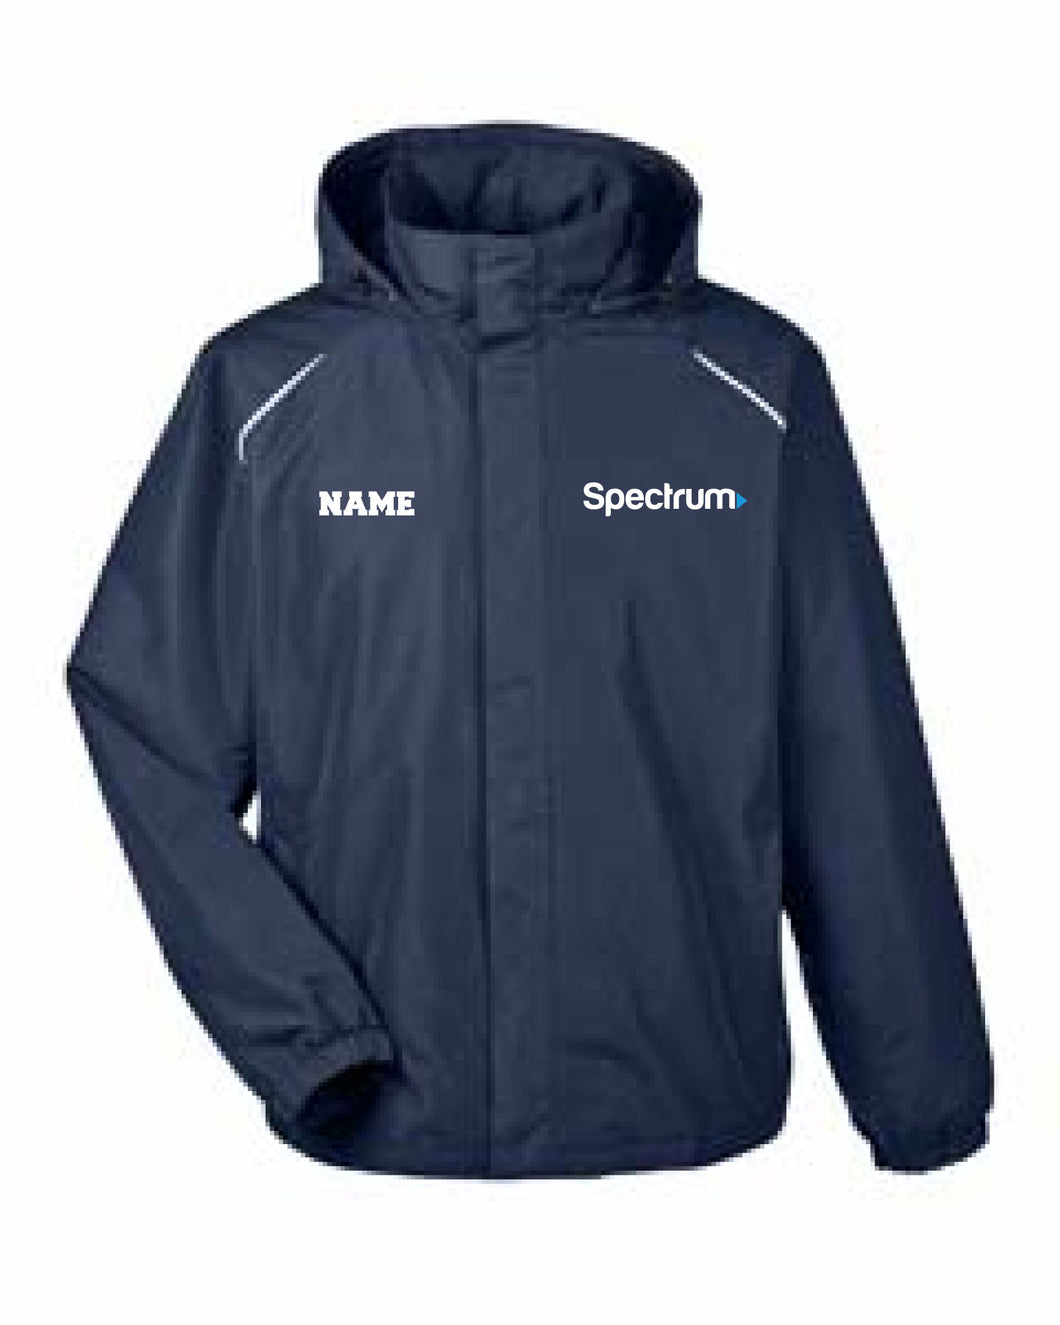 Spectrum All Season Hooded Men's Jacket - Navy - 5KounT2018